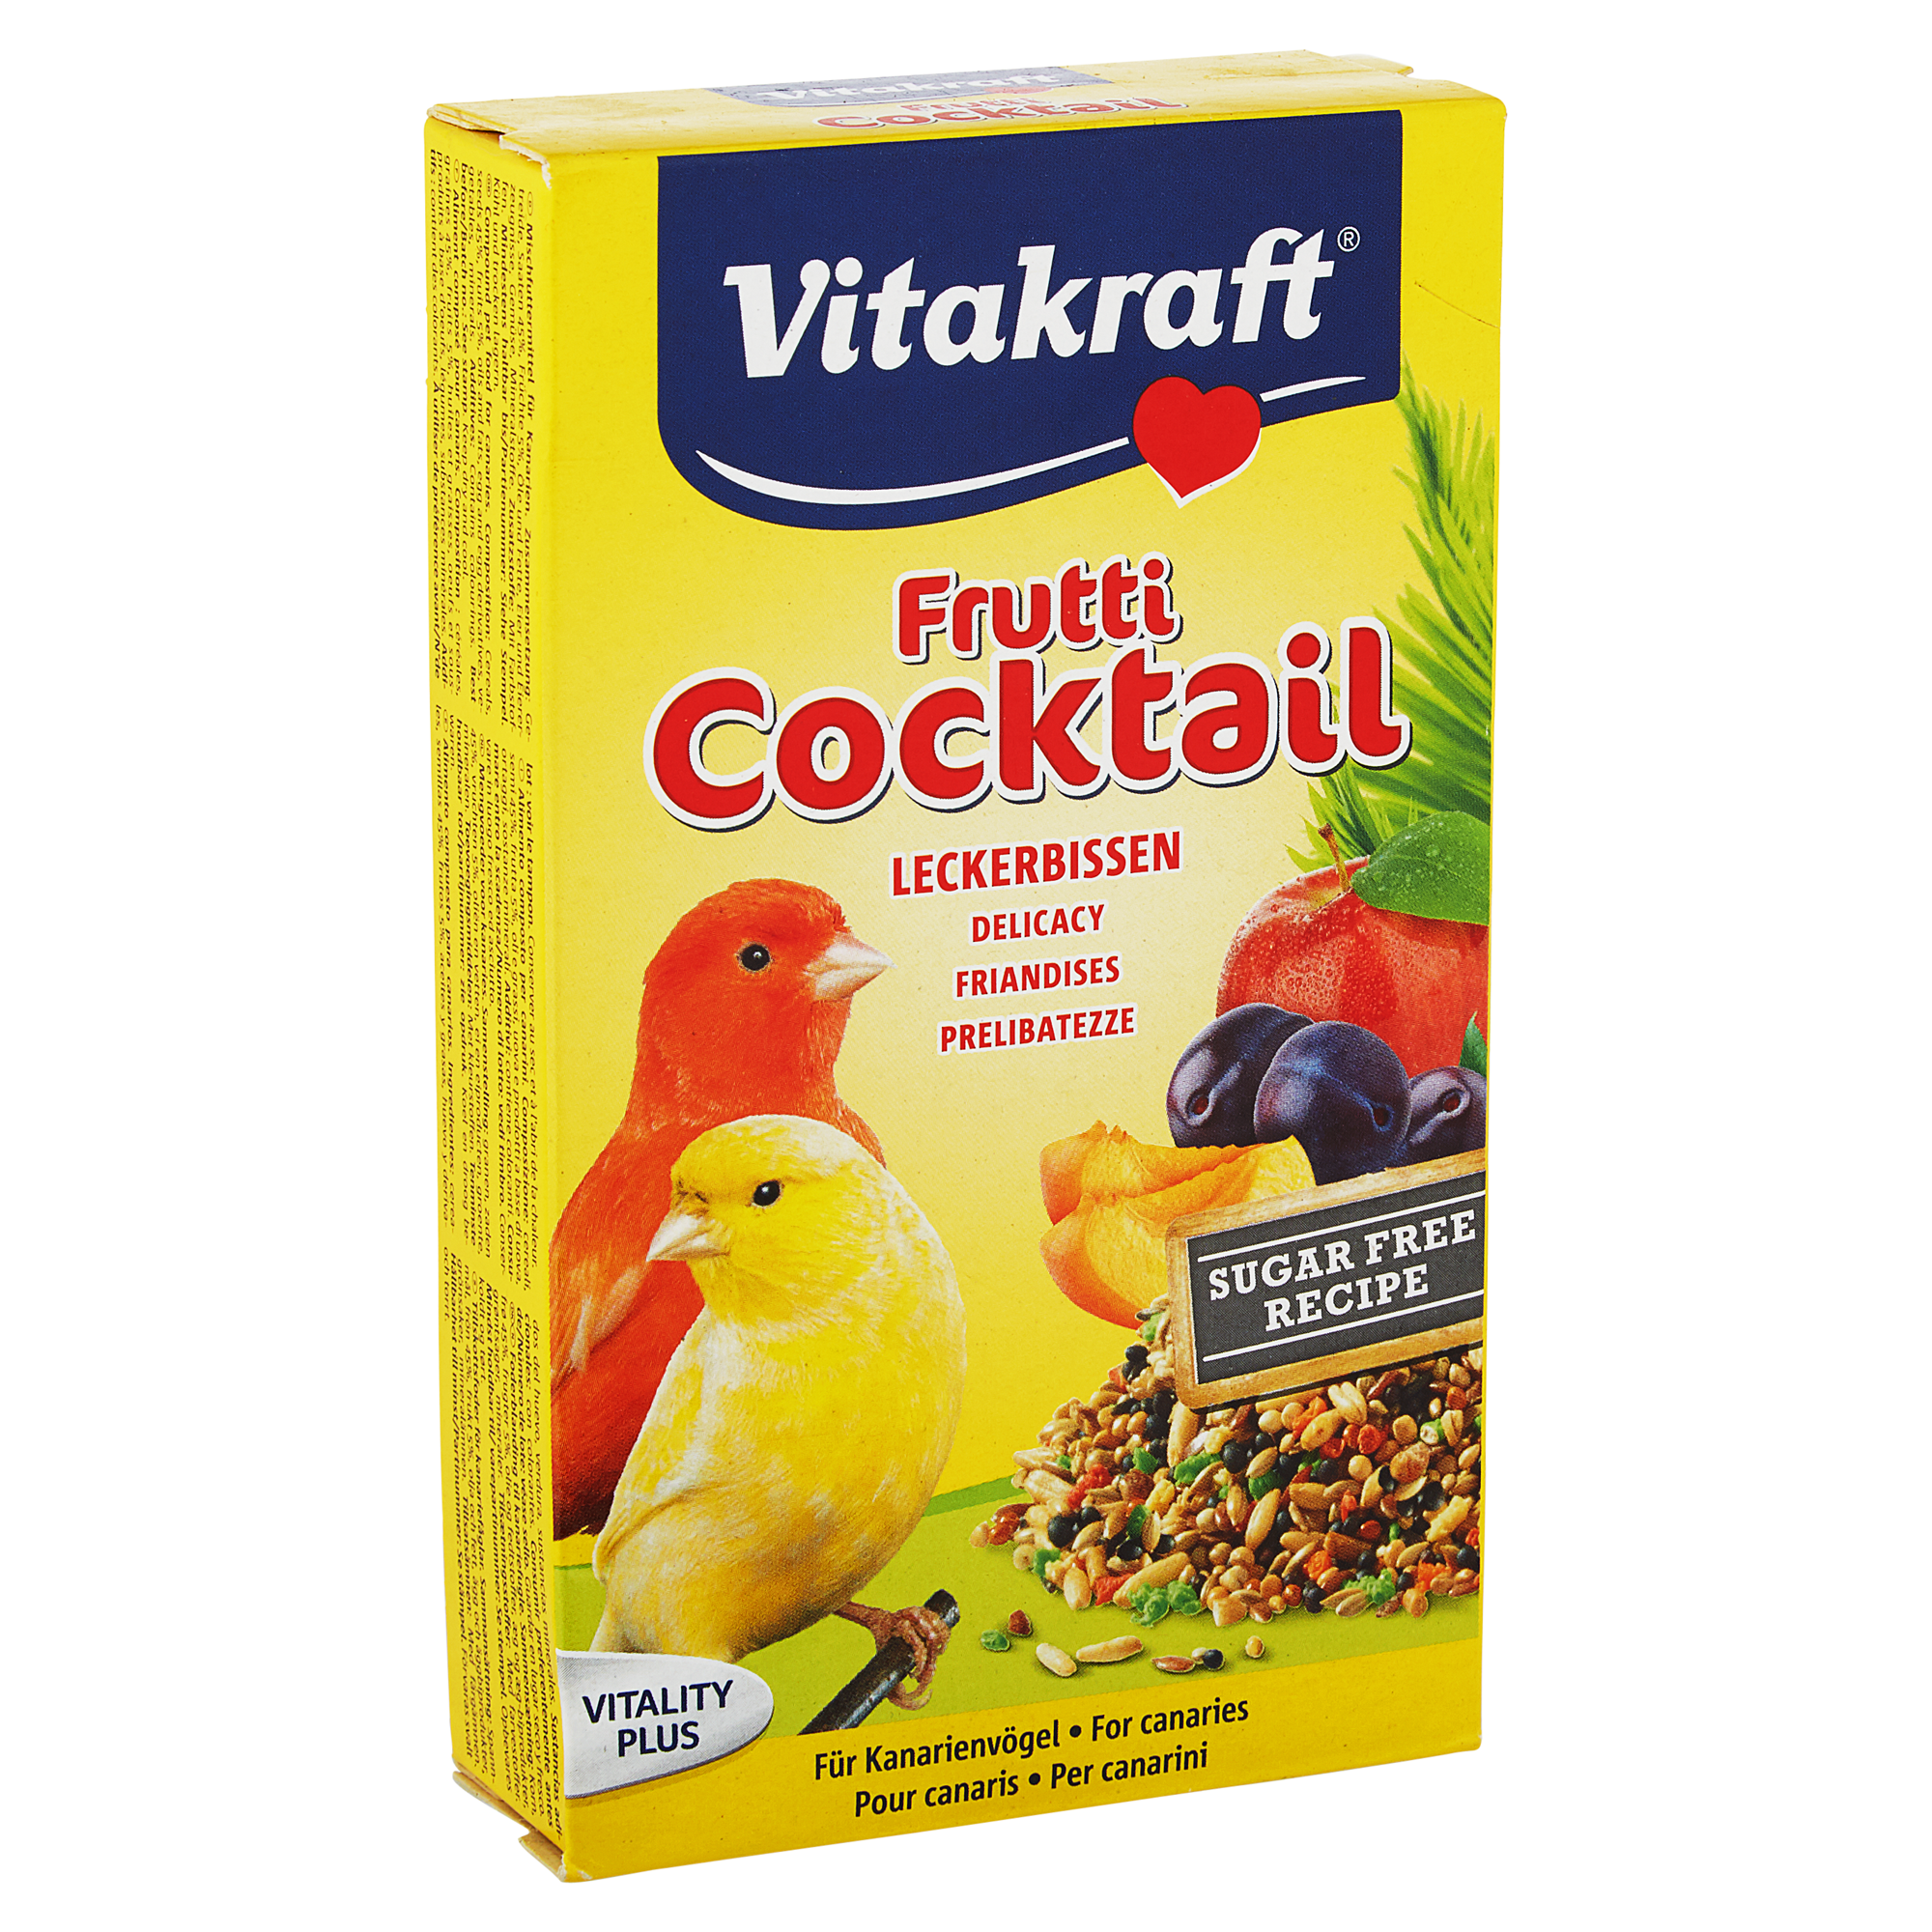 Fruchtcocktail "Vitality Plus" 175 g Kanarienvögel + product picture